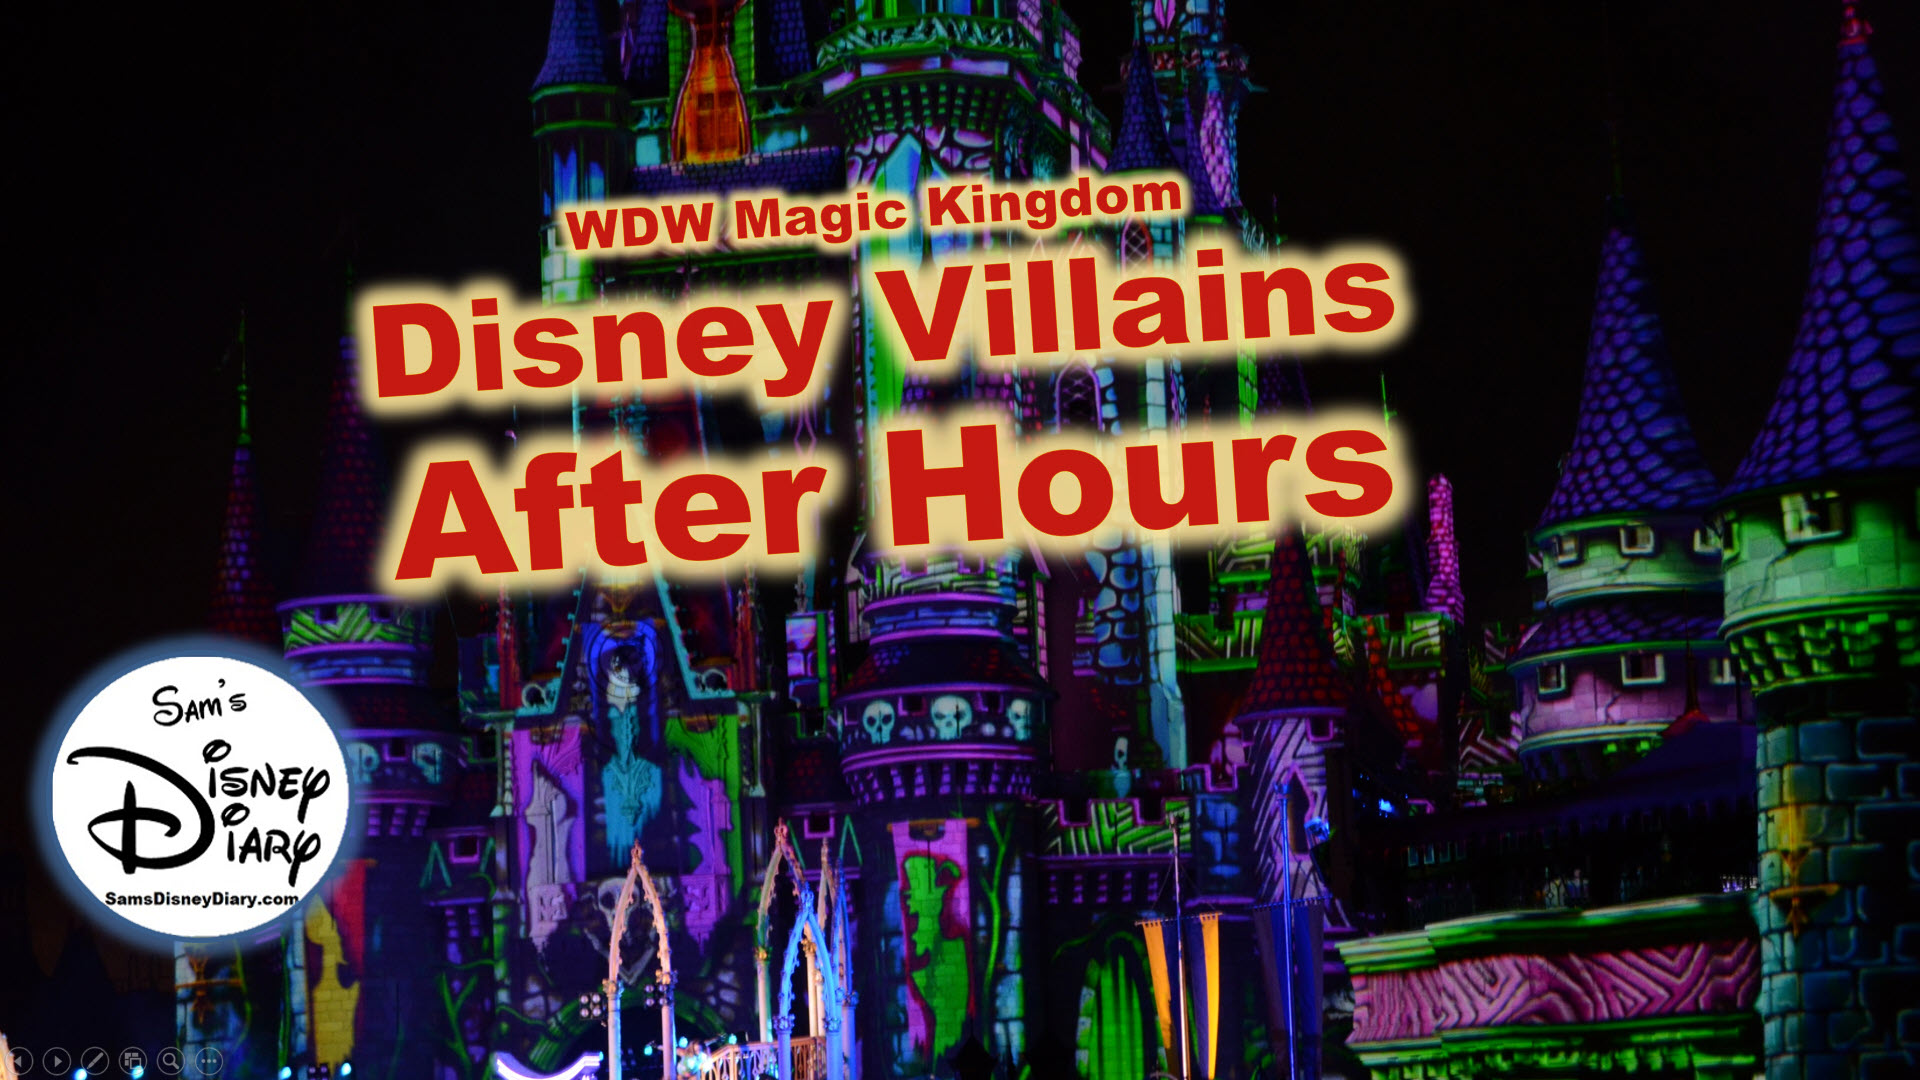 SamsDisneyDiary Episode 123: Disney Villains After Hours